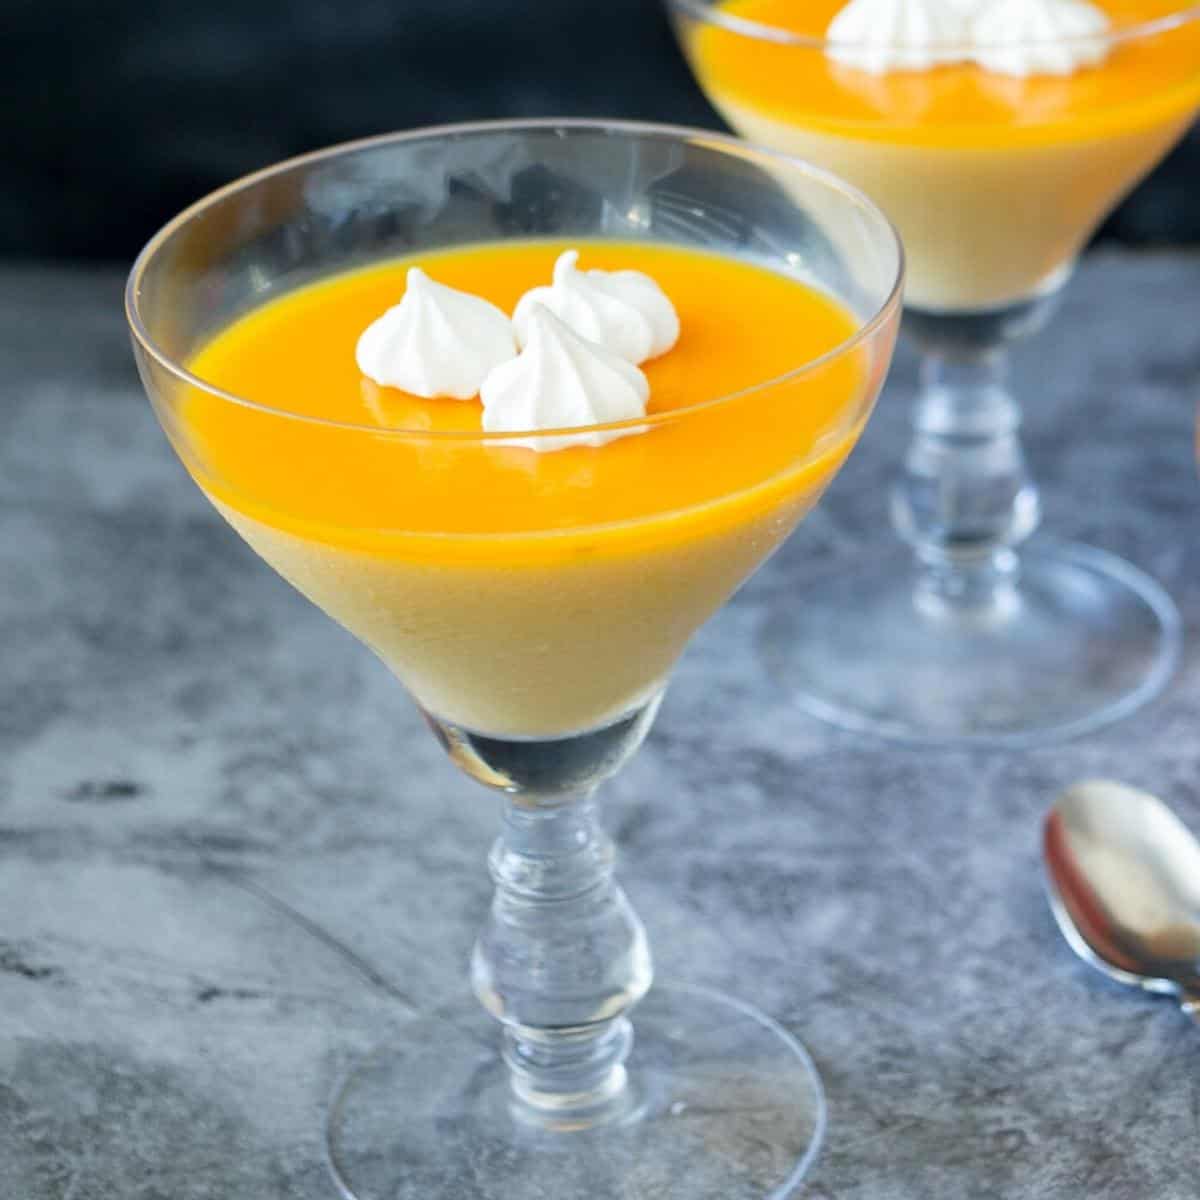 Panna cotta in a glass with mango jello.